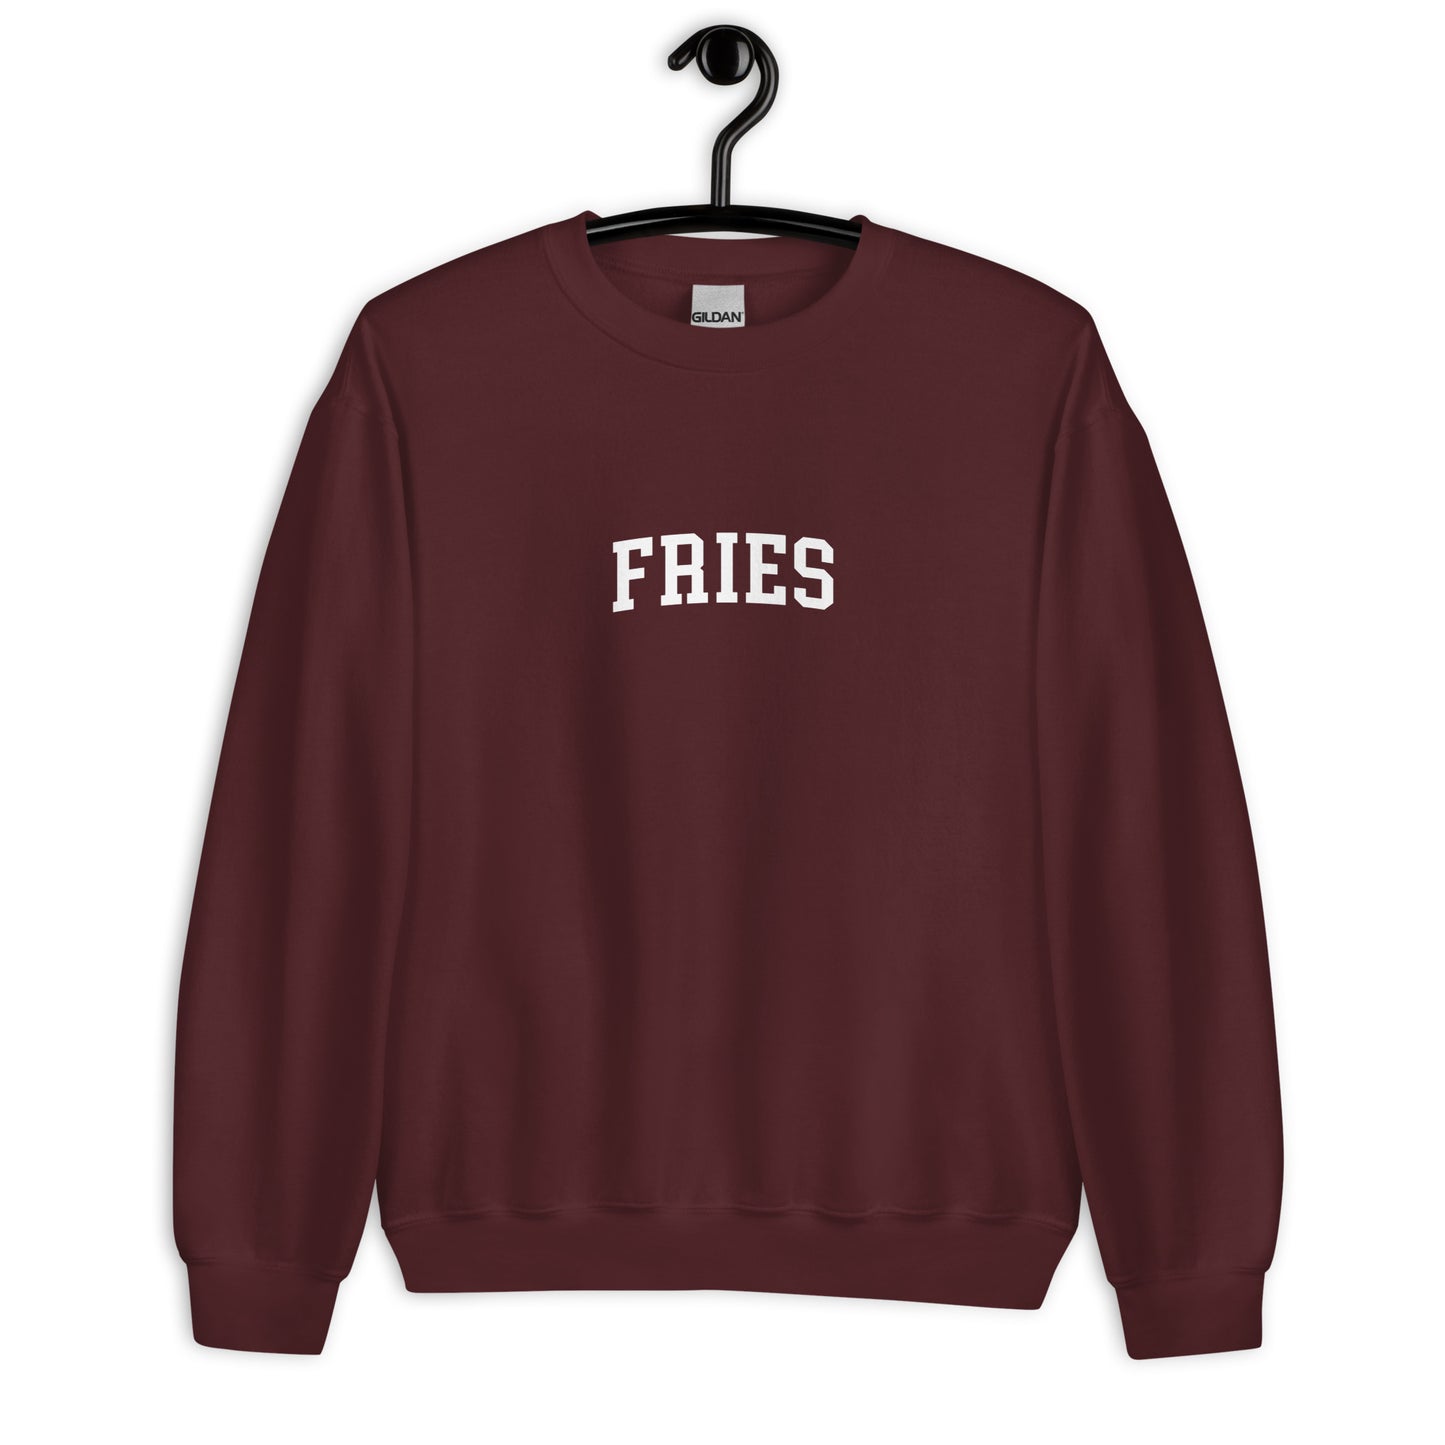 Fries Sweatshirt - Arched Font